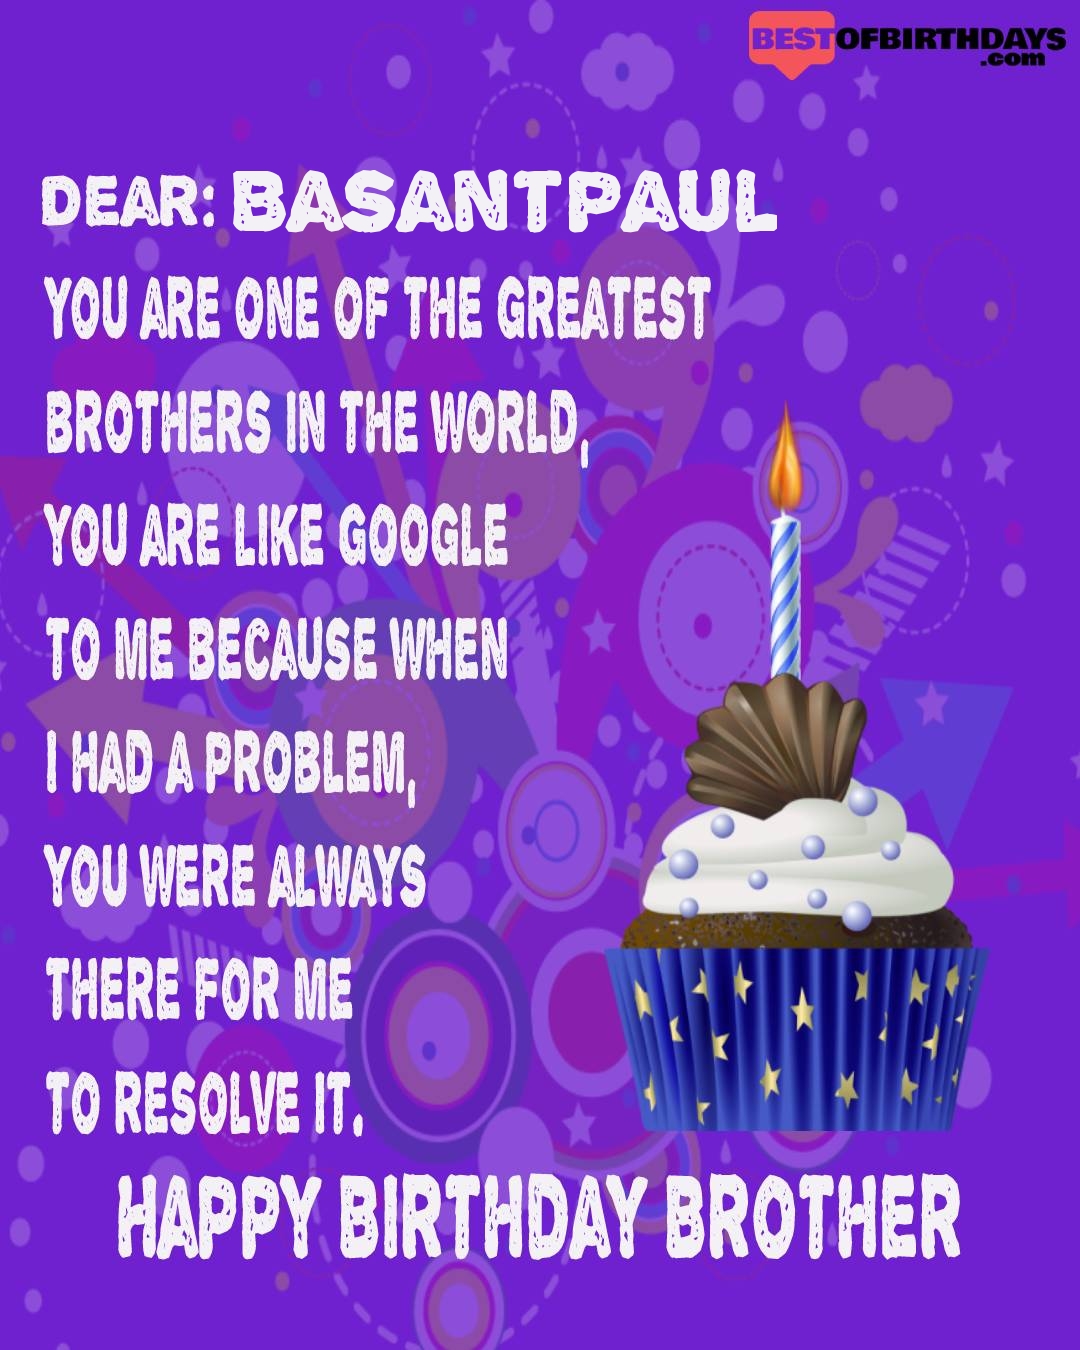 Happy birthday basantpaul bhai brother bro